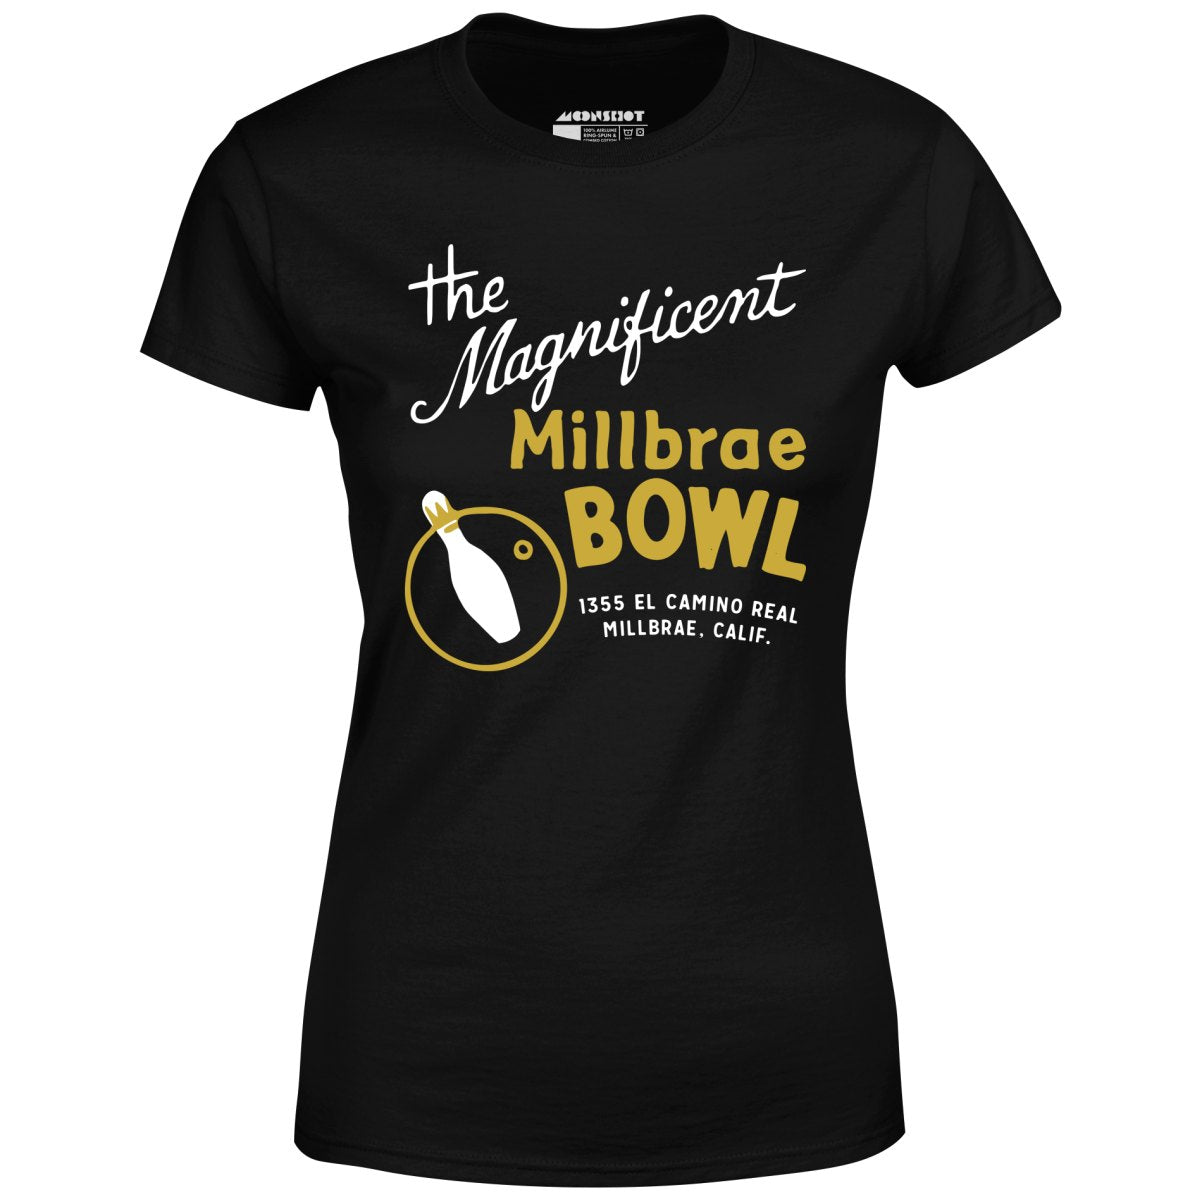 Millbrae Bowl - Millbrae, CA - Vintage Bowling Alley - Women's T-Shirt